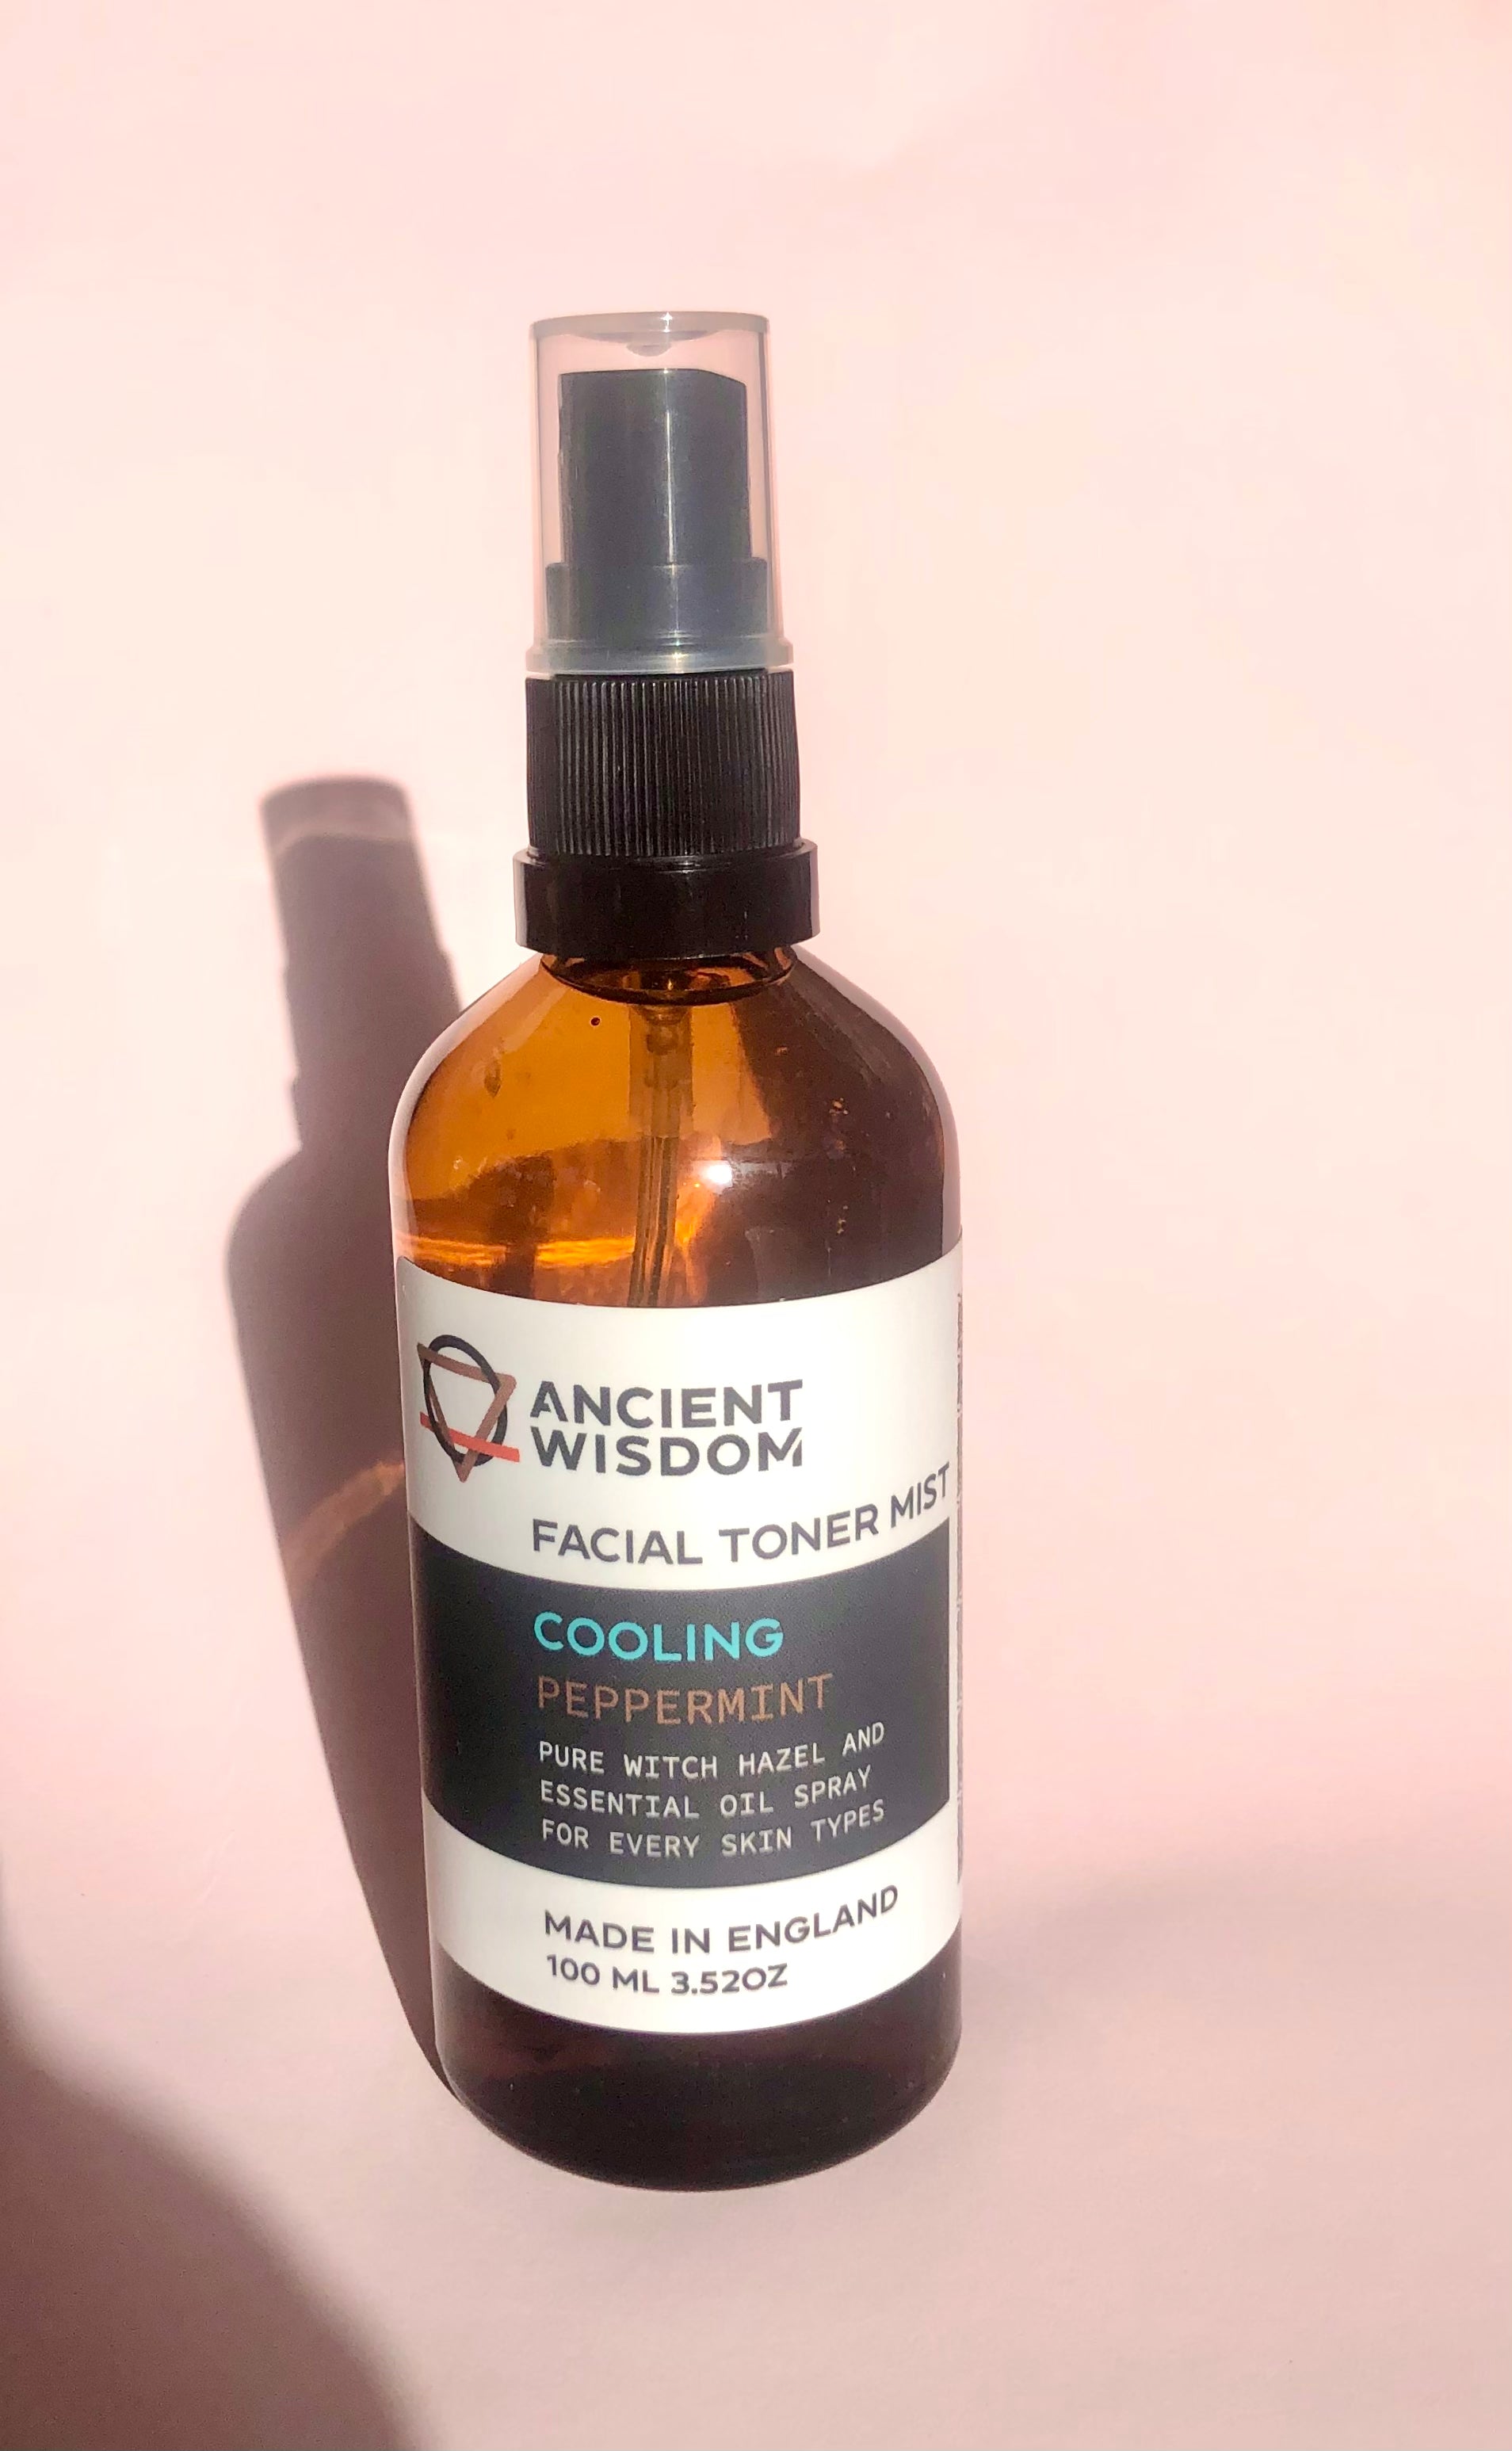 Facial Toner Mist ☽ Cooling Peppermint ☽ fra Ancient Wisdom ☽ 100 ml